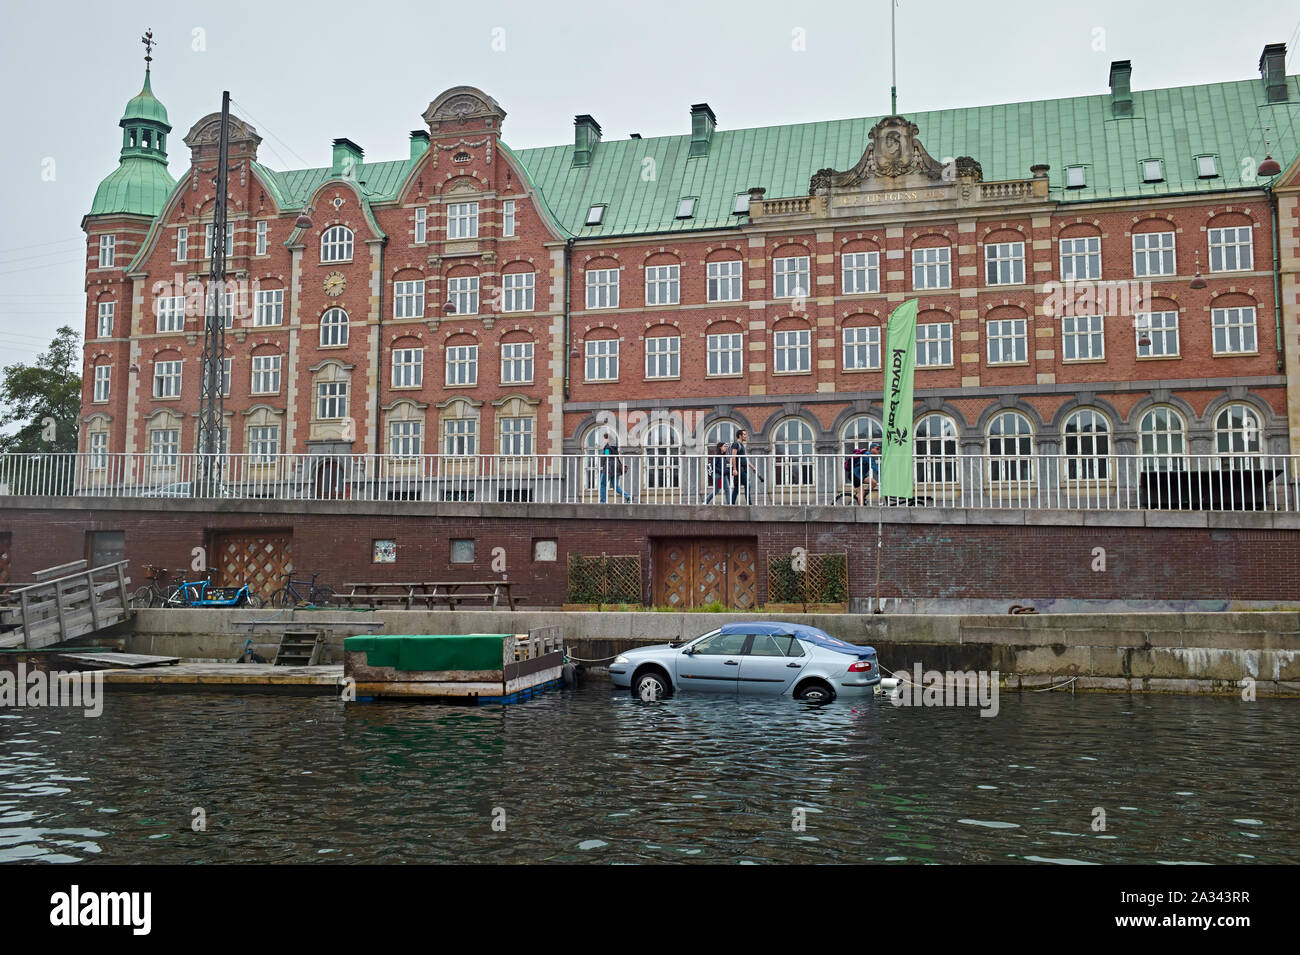 Denmark, Copenhagen, Colourful facade and old ships along the Nyhavn Canal Stock Photo